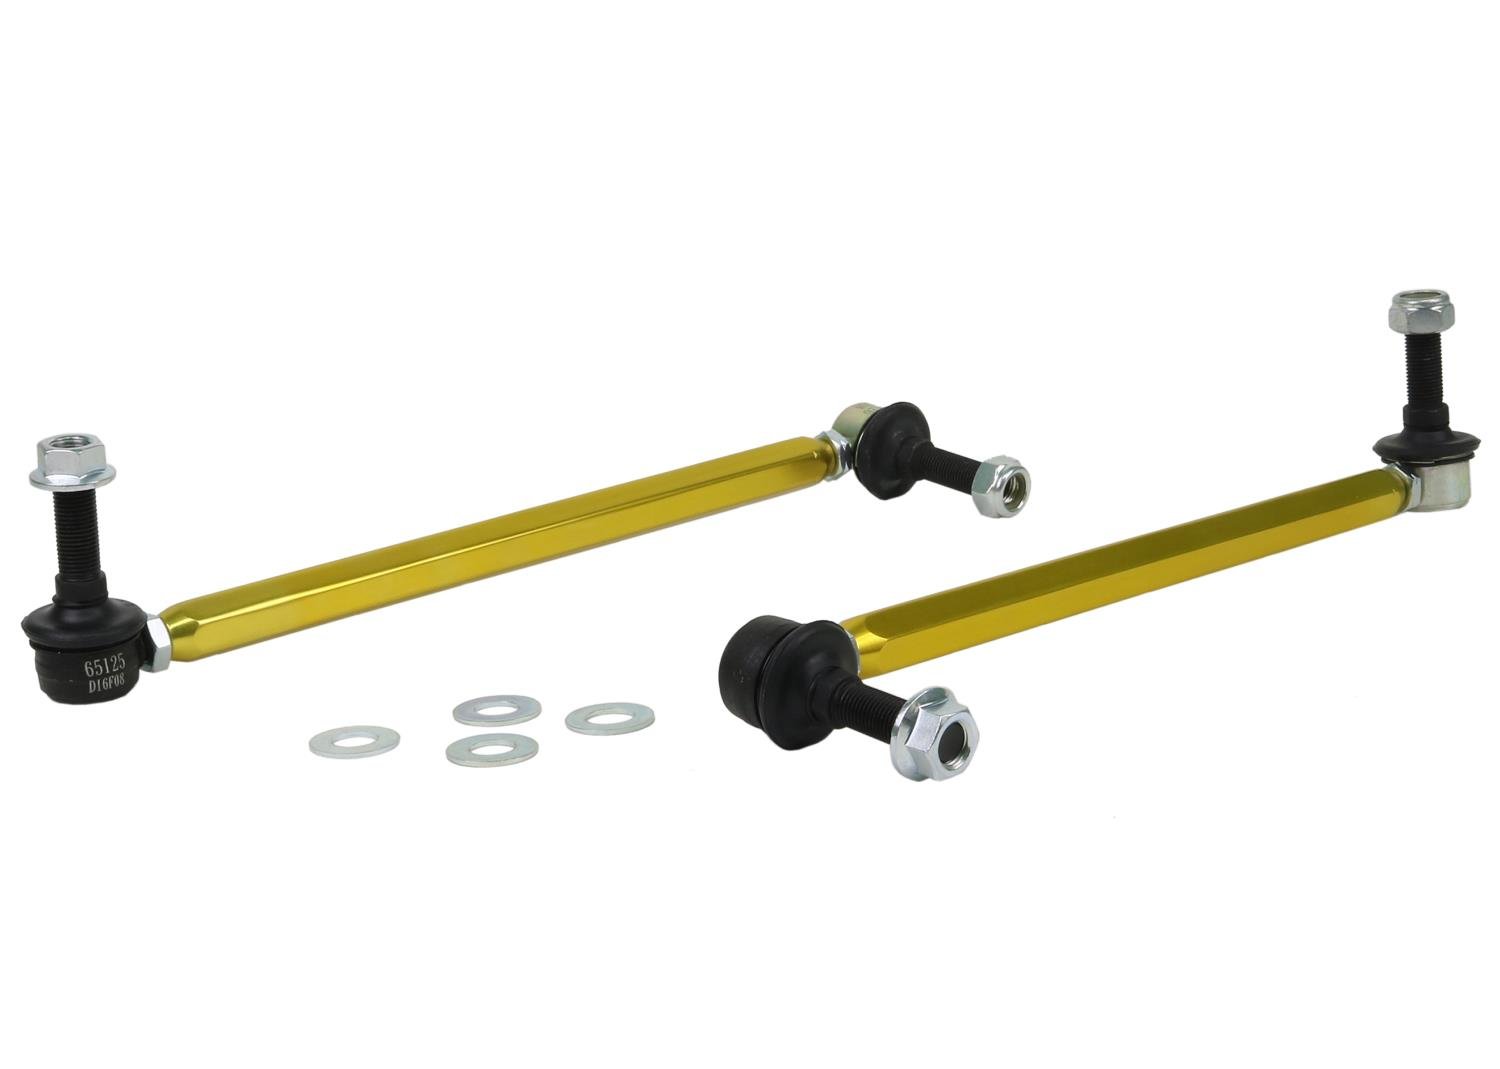 KLC180-315 Universal Sway Bar Link Assembly Heavy Duty 310 mm-335 mm Adjustable Steel Ball